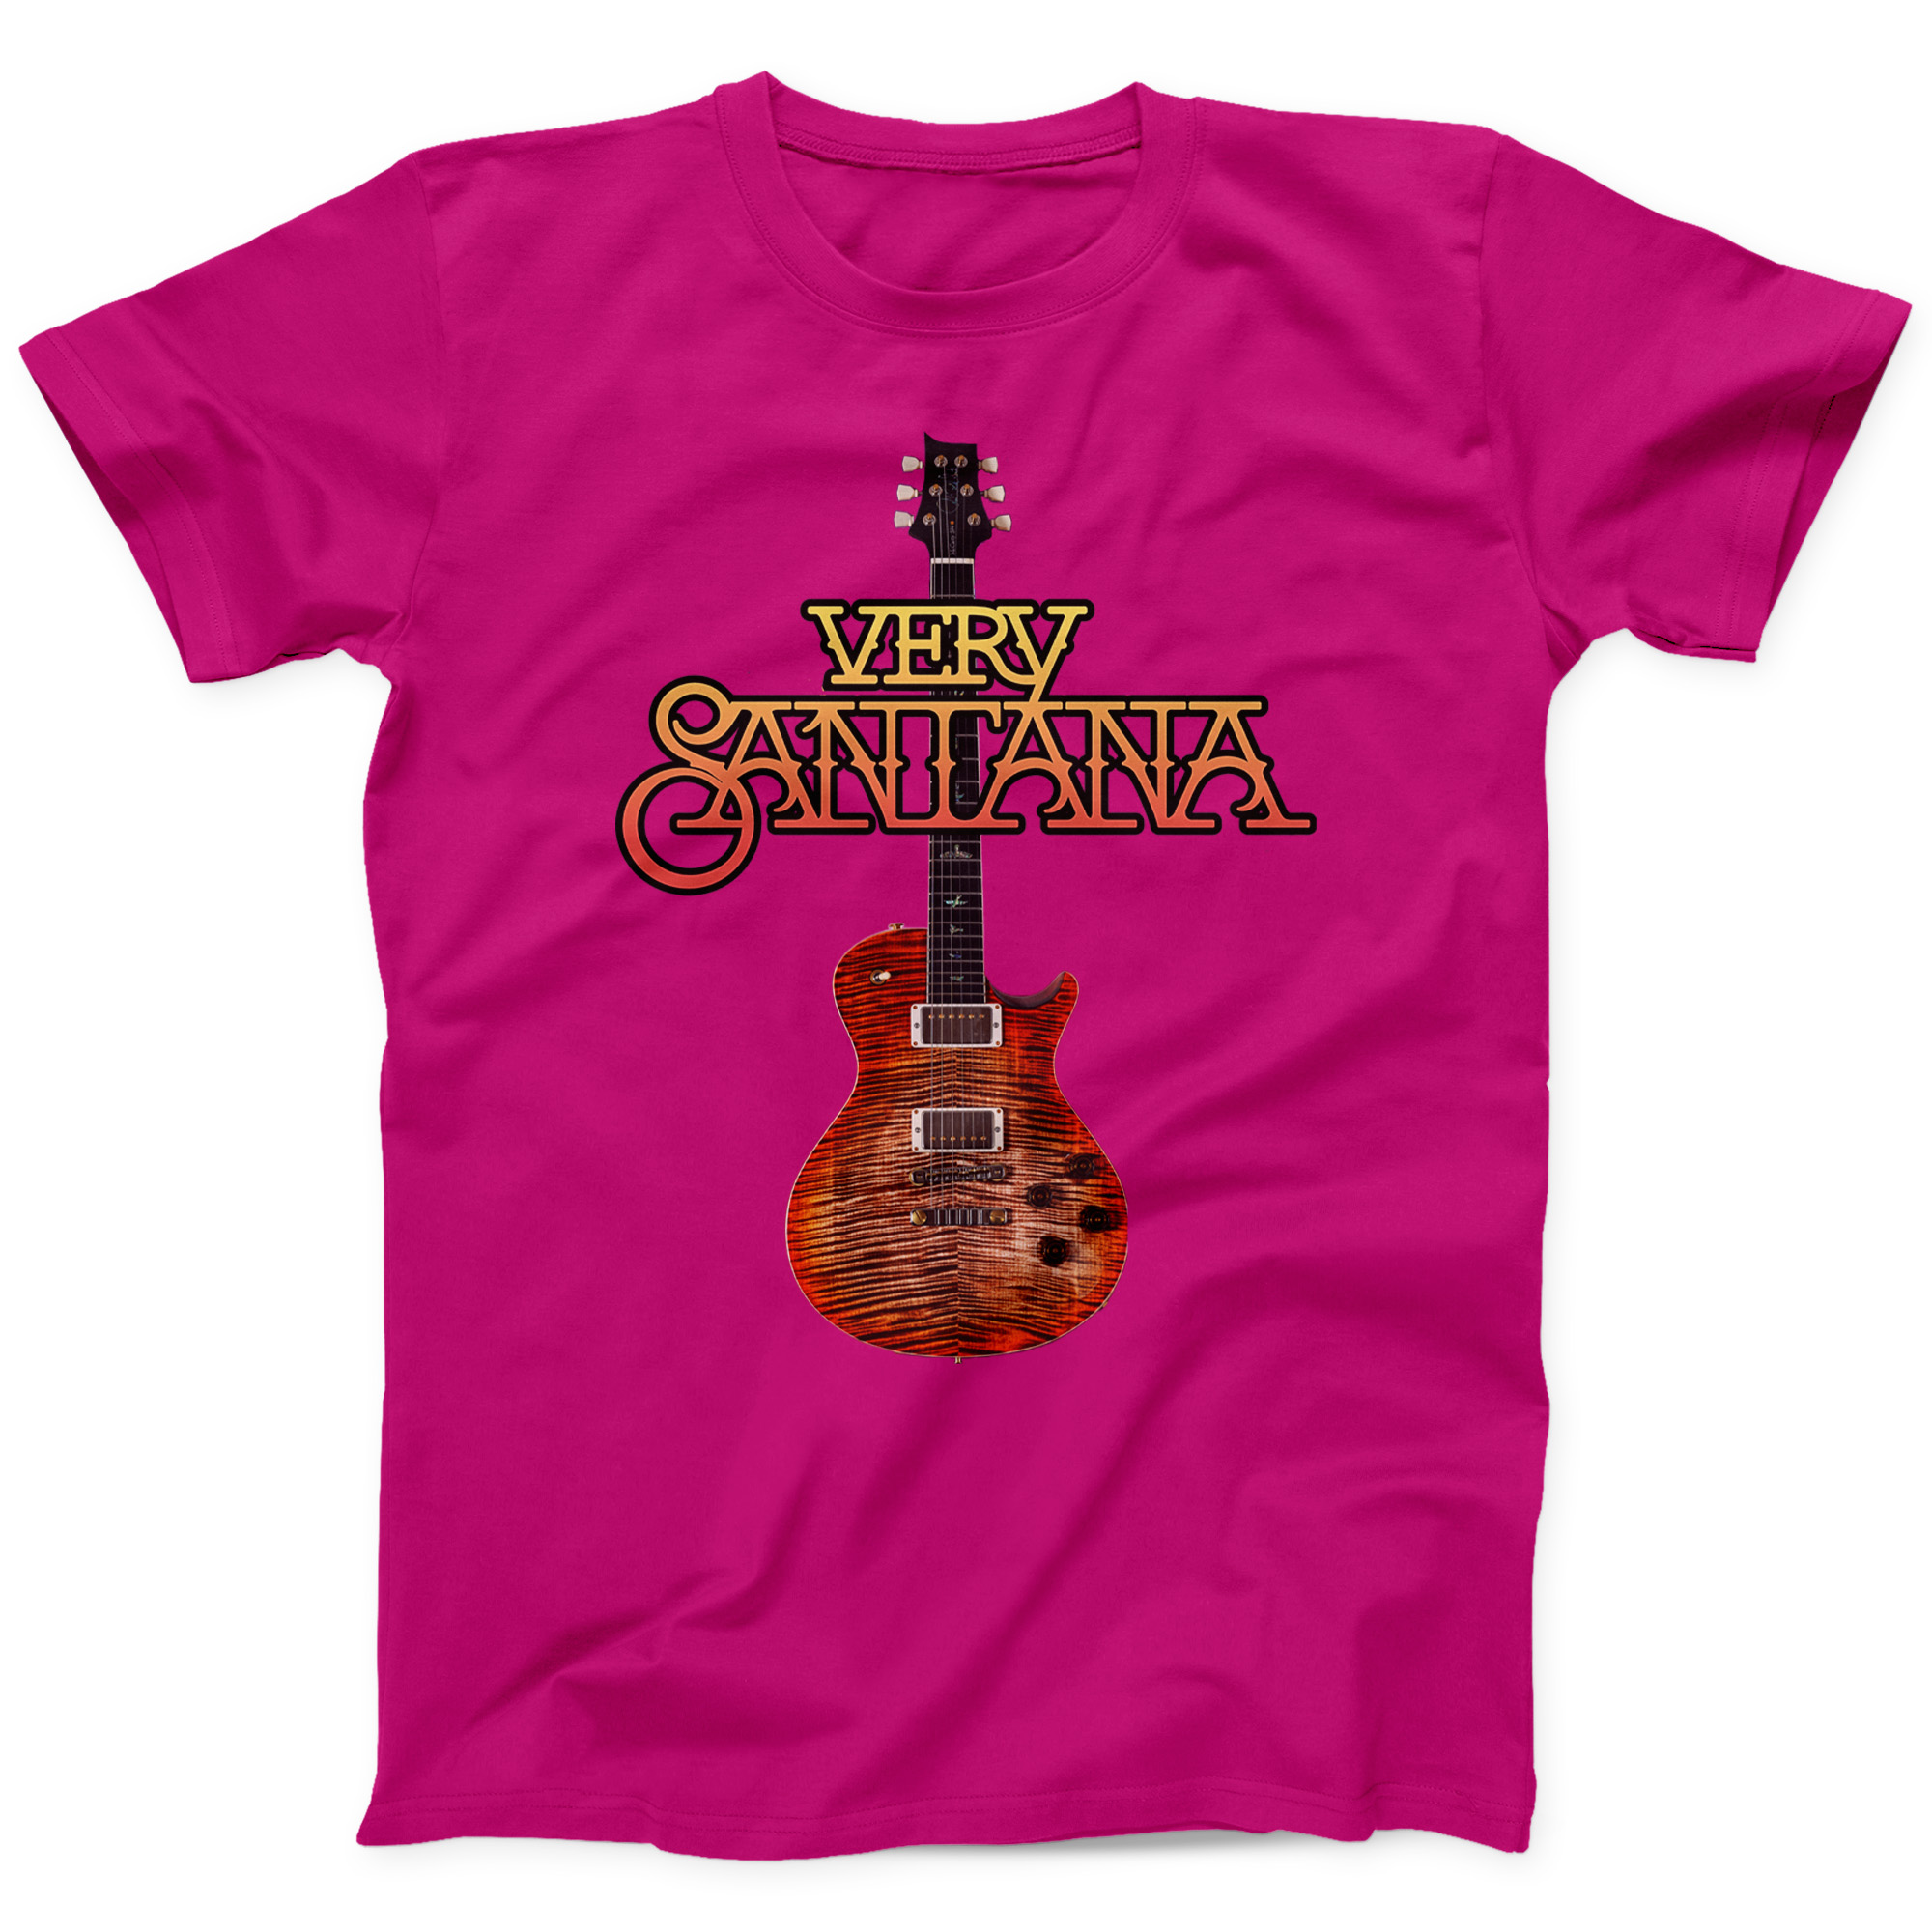 Hot Pink "Very Santana" T-Shirt